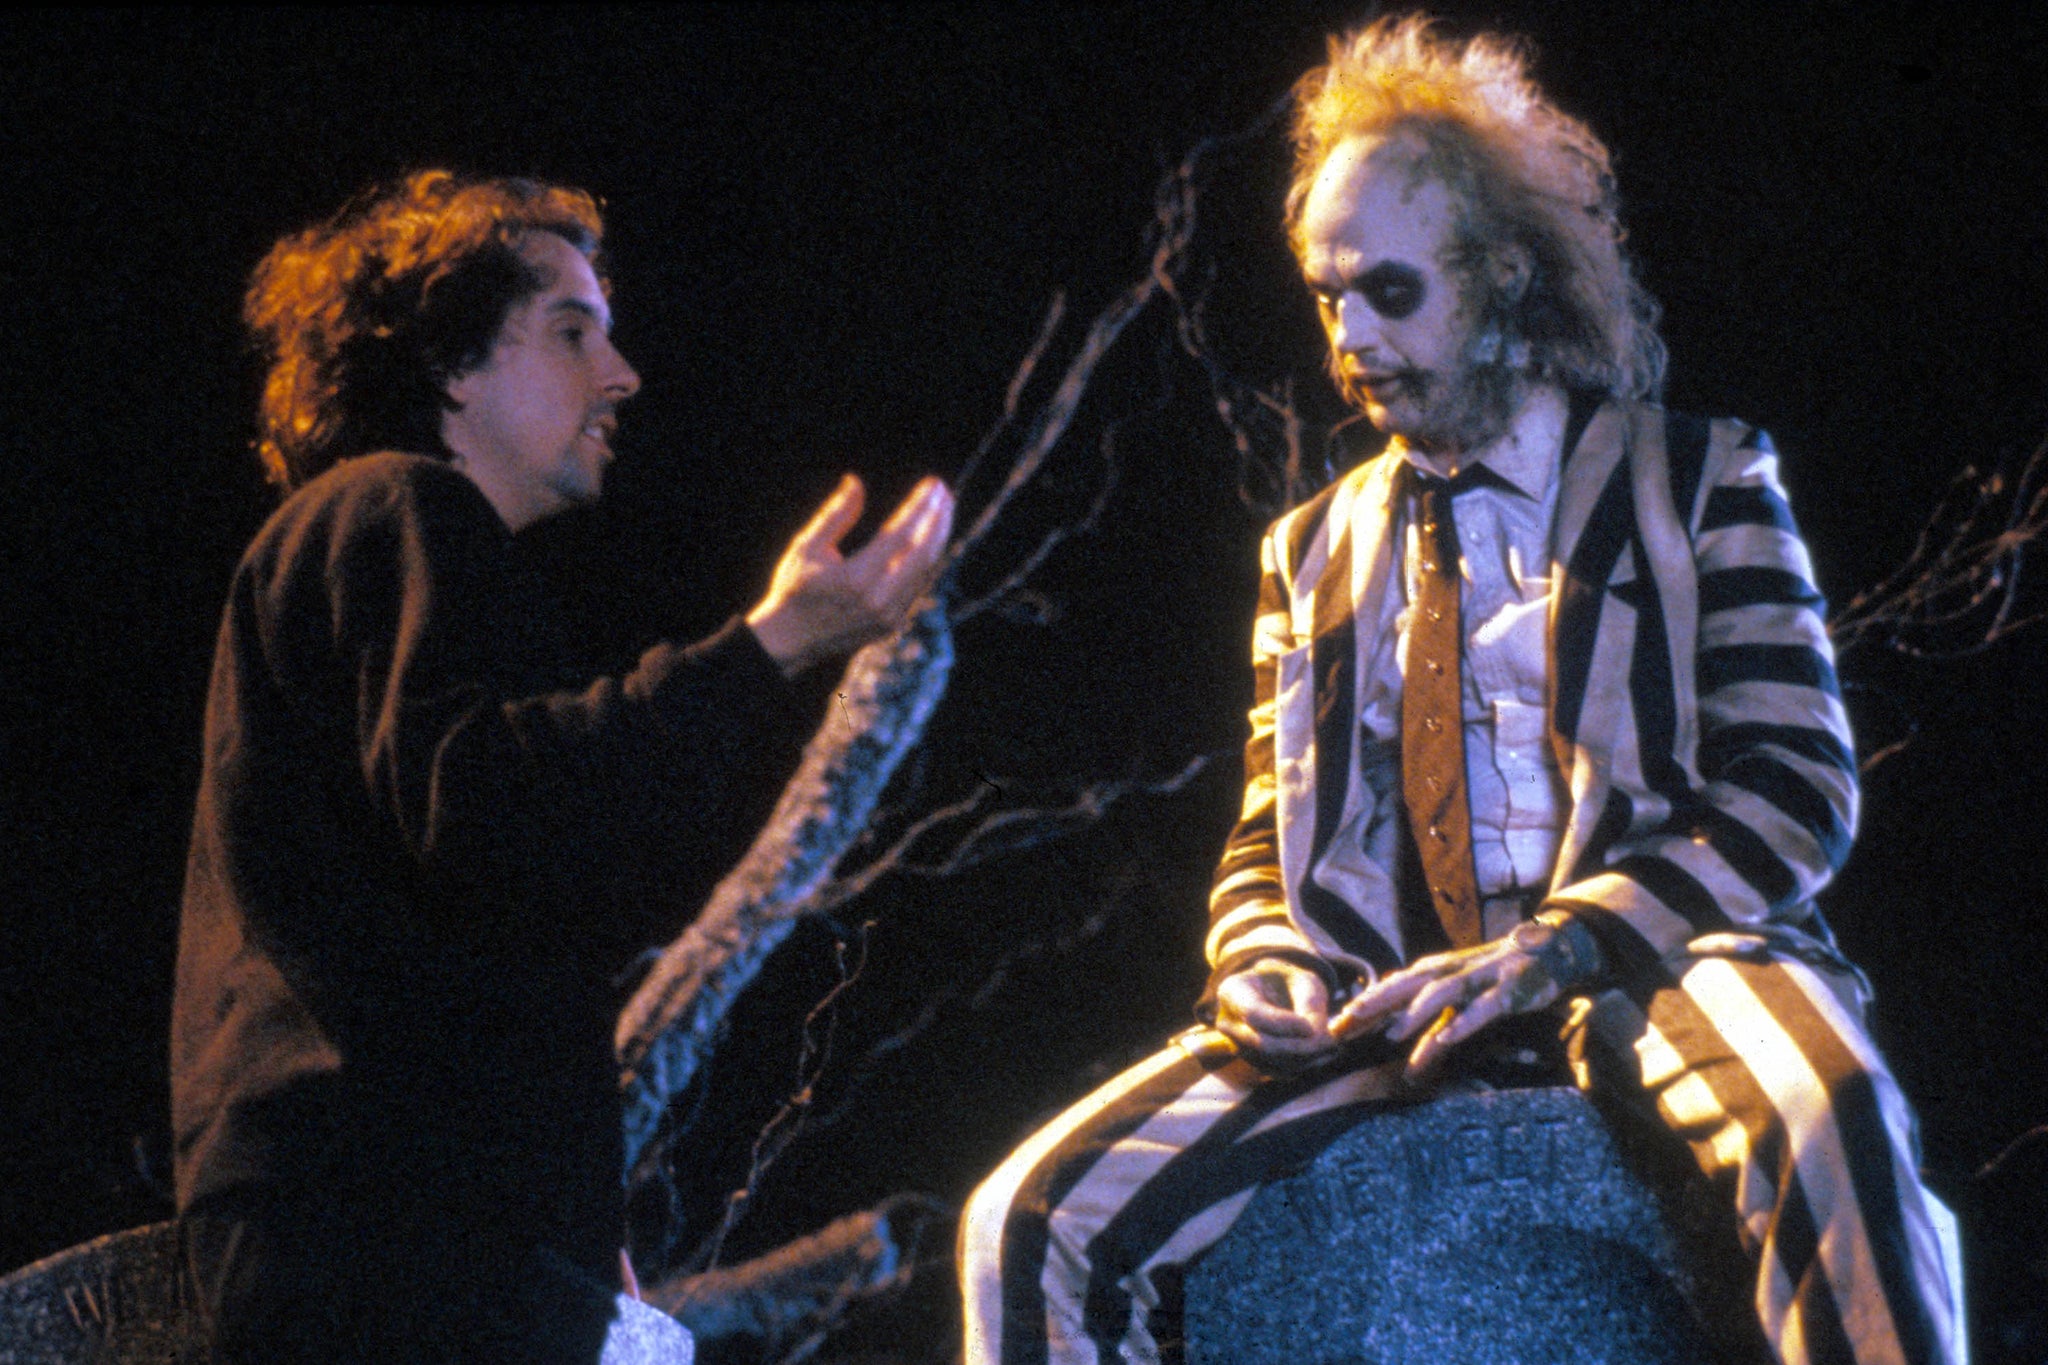 Tim Burton directing Michael Keaton on the set of the original ‘Beetlejuice’ in 1988